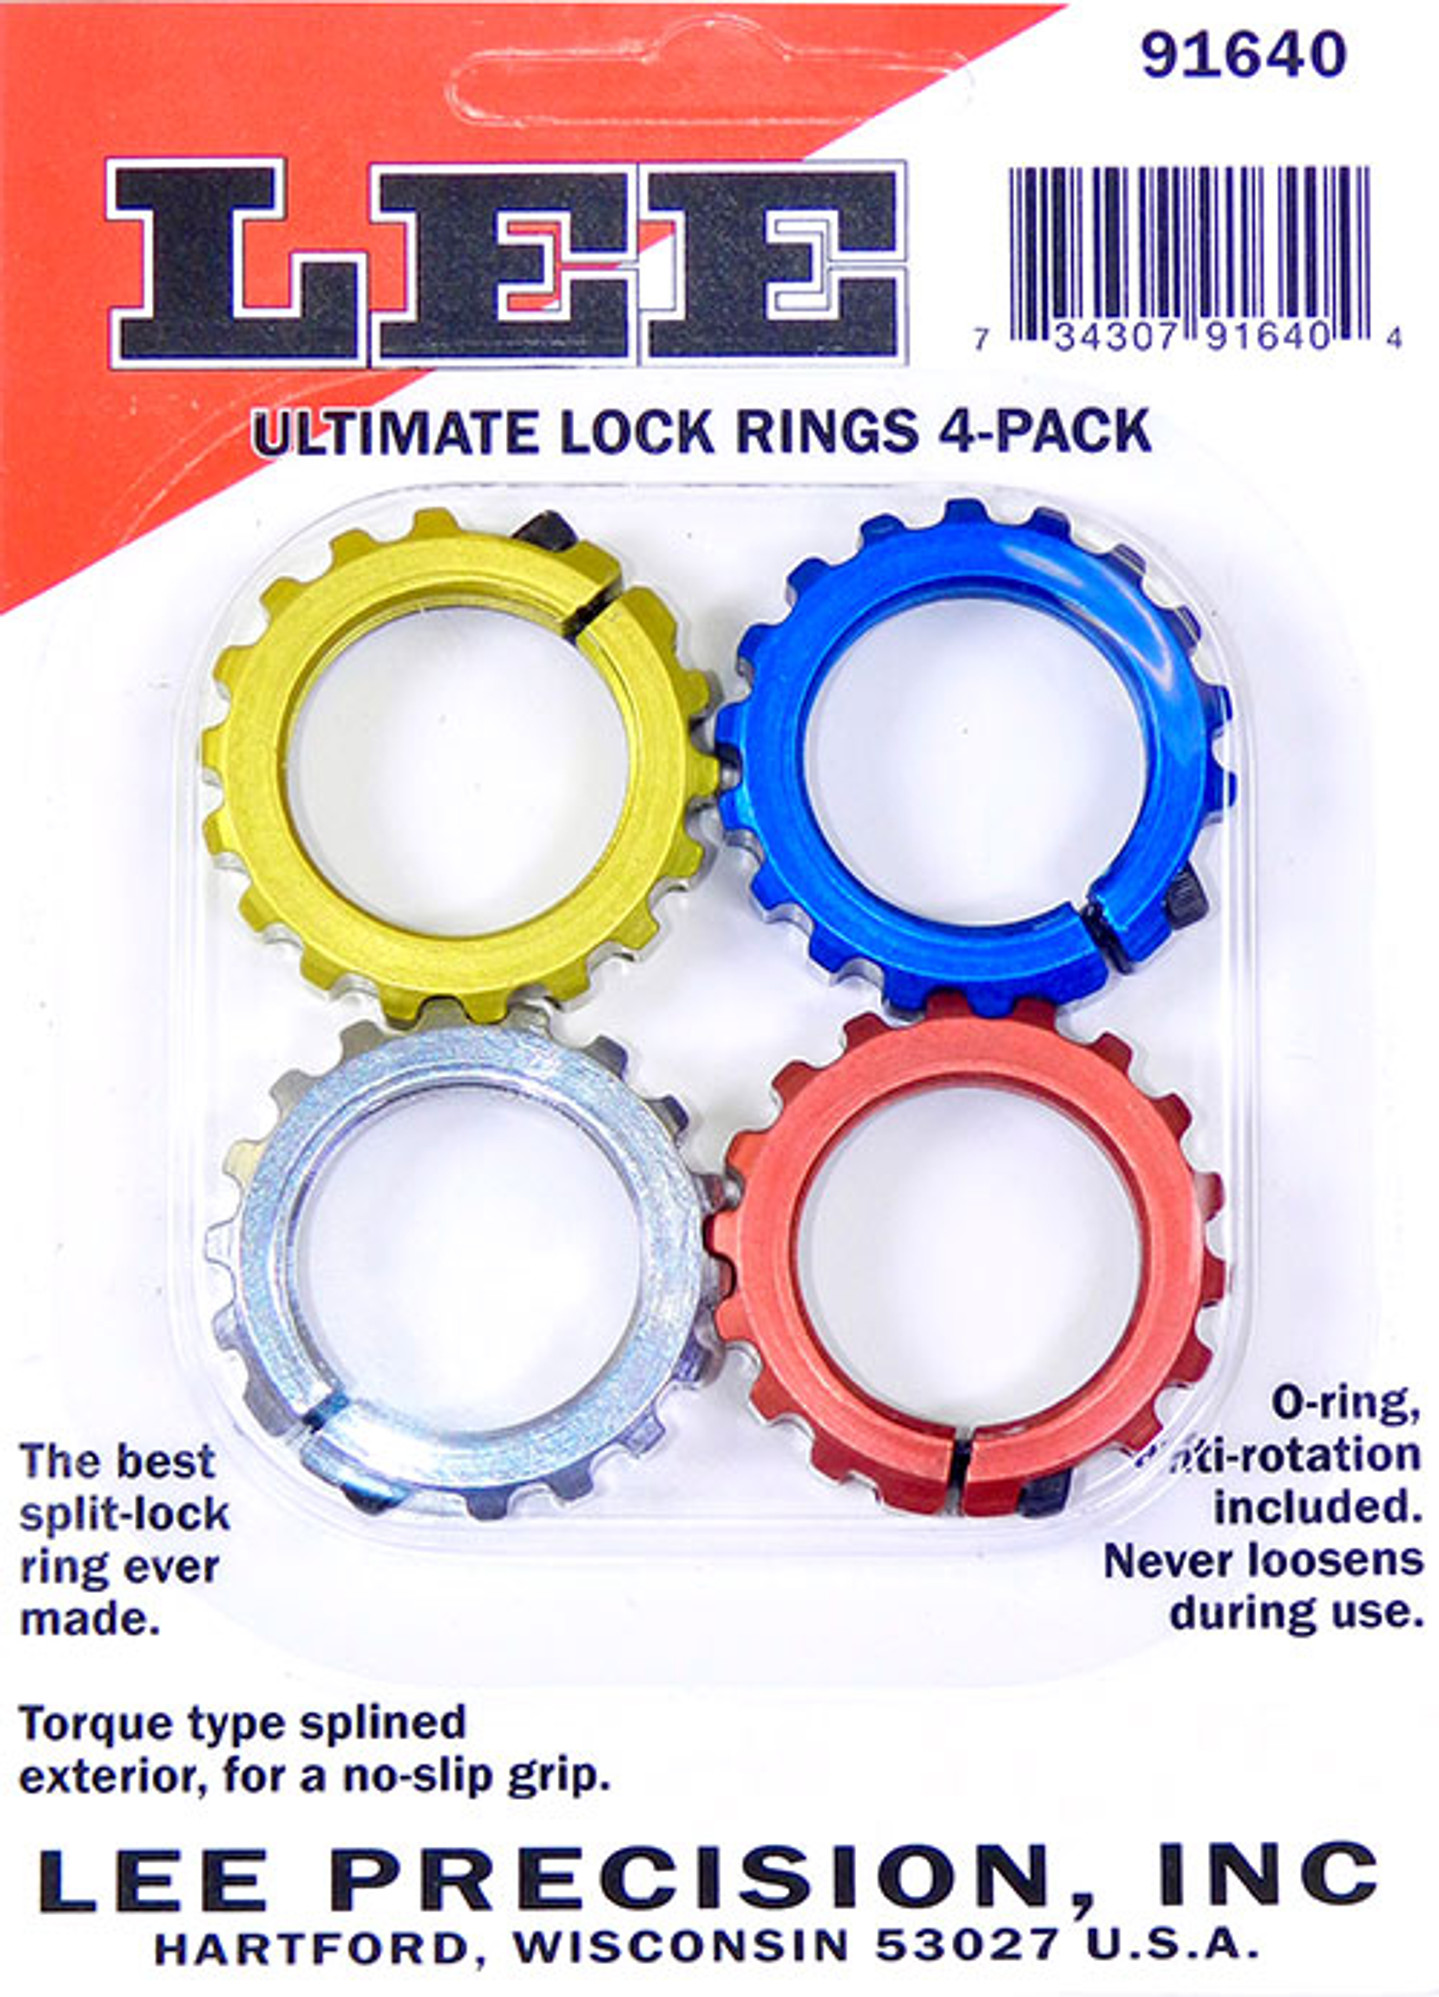 Ultimate Lock Rings 4 Pack